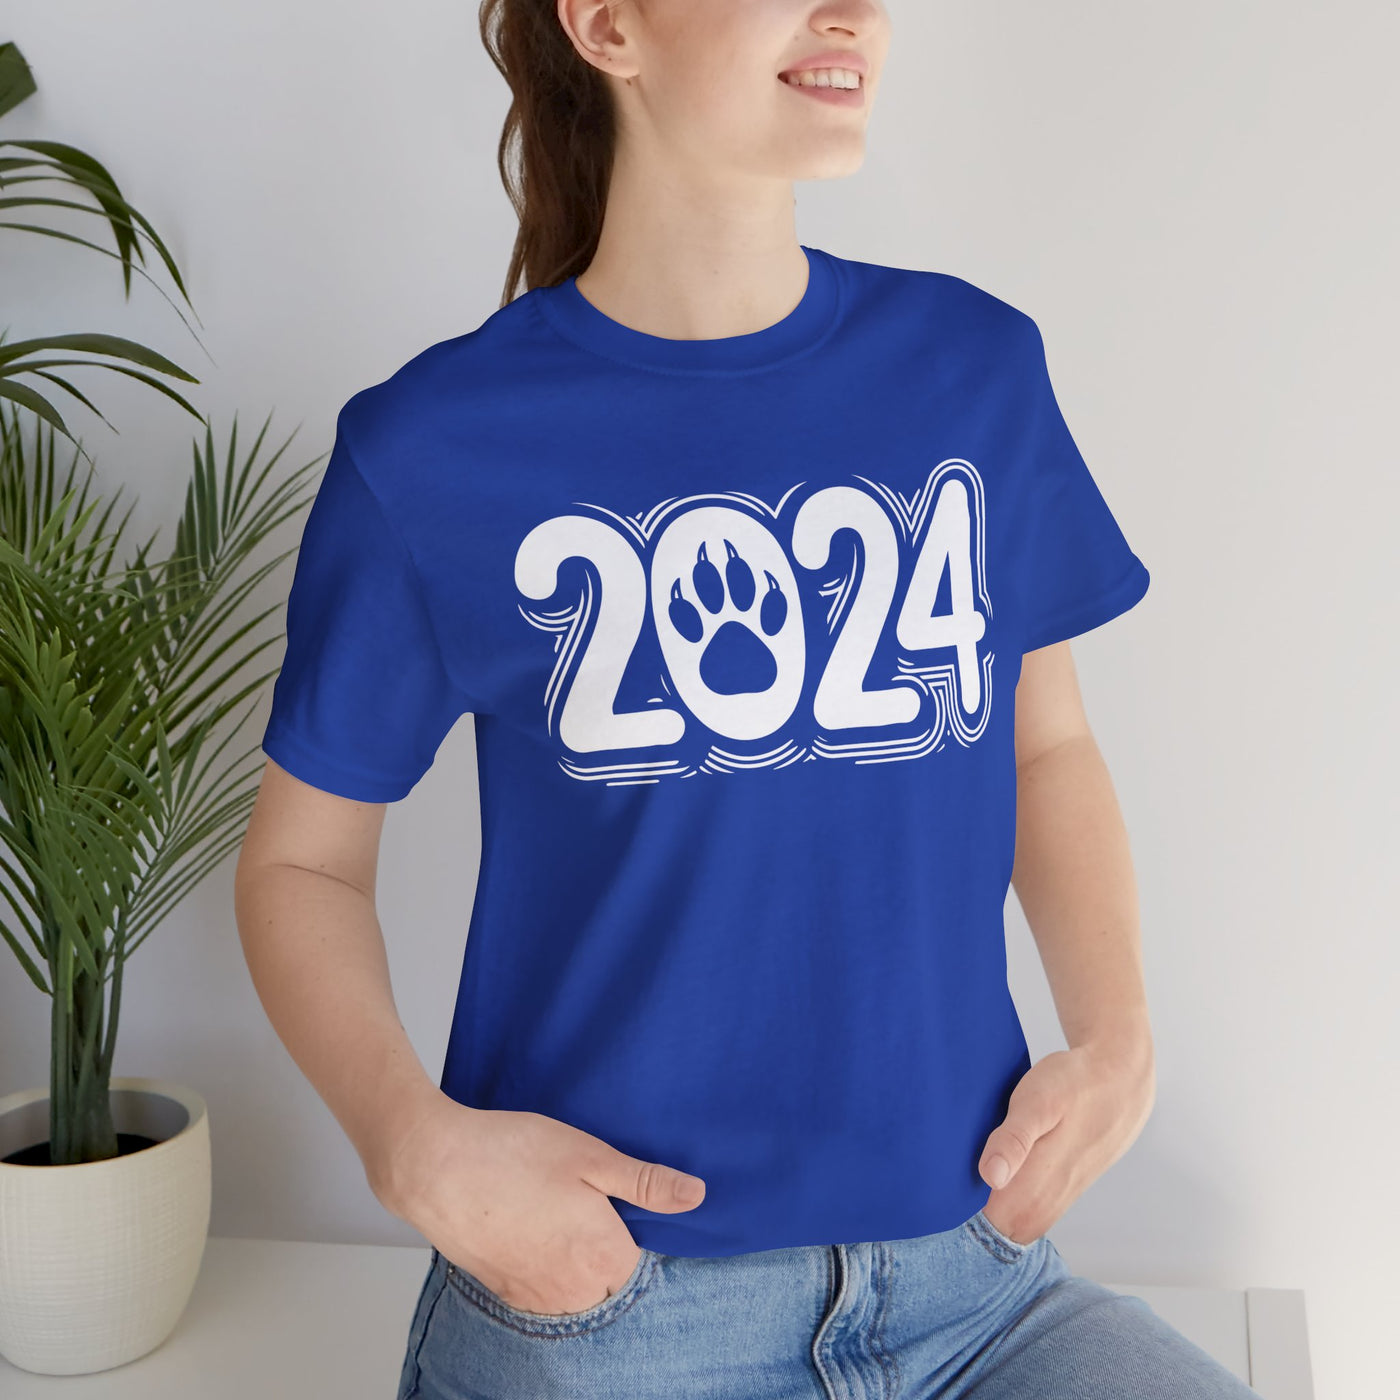 2024 Dog Paw T-Shirt